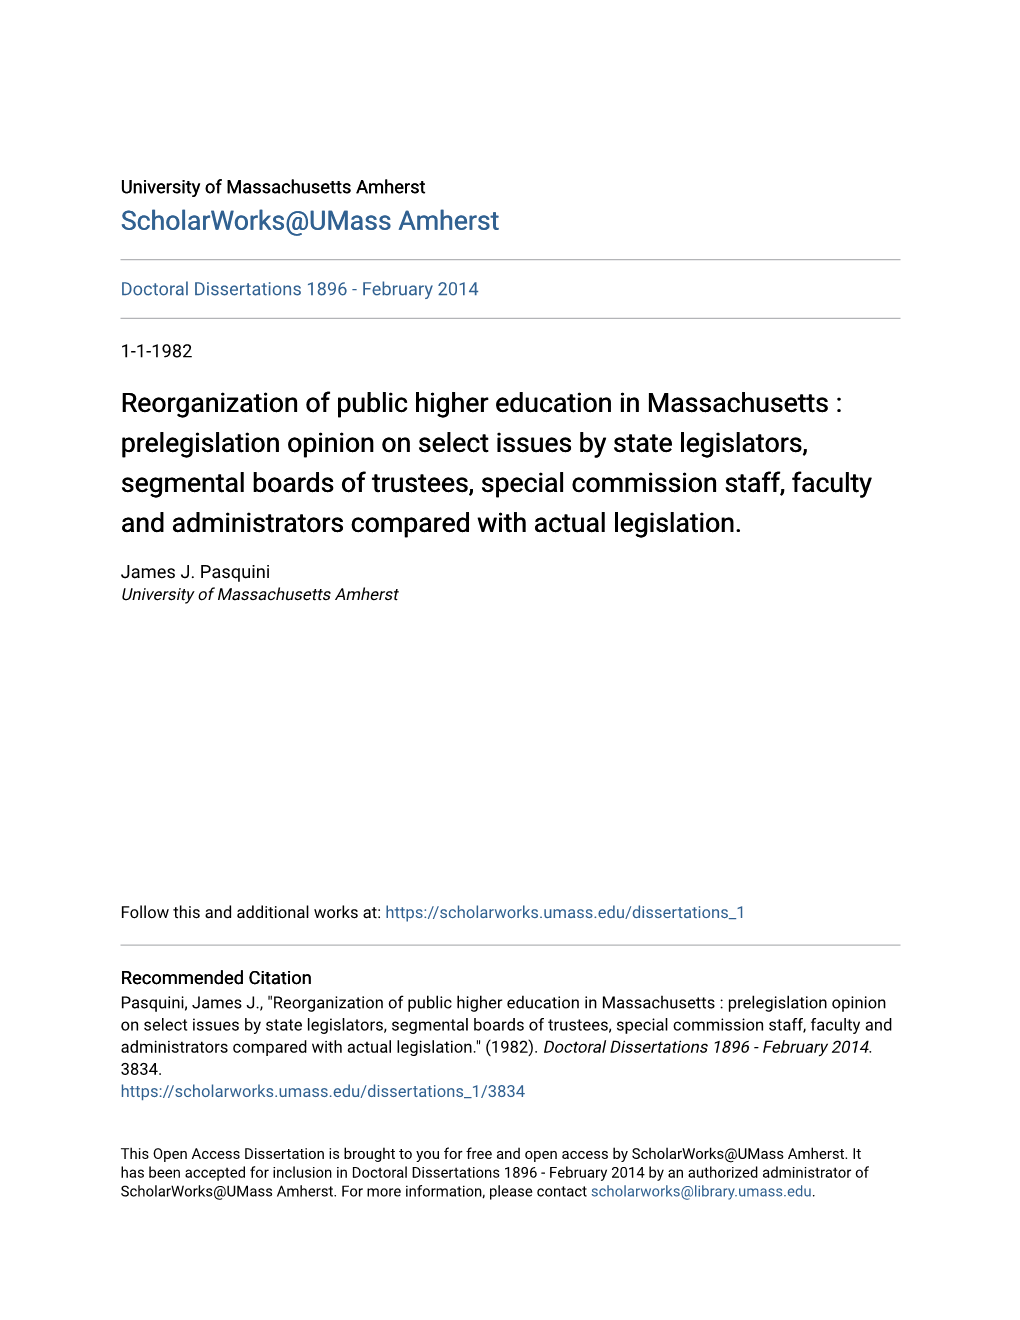 Reorganization of Public Higher Education in Massachusetts